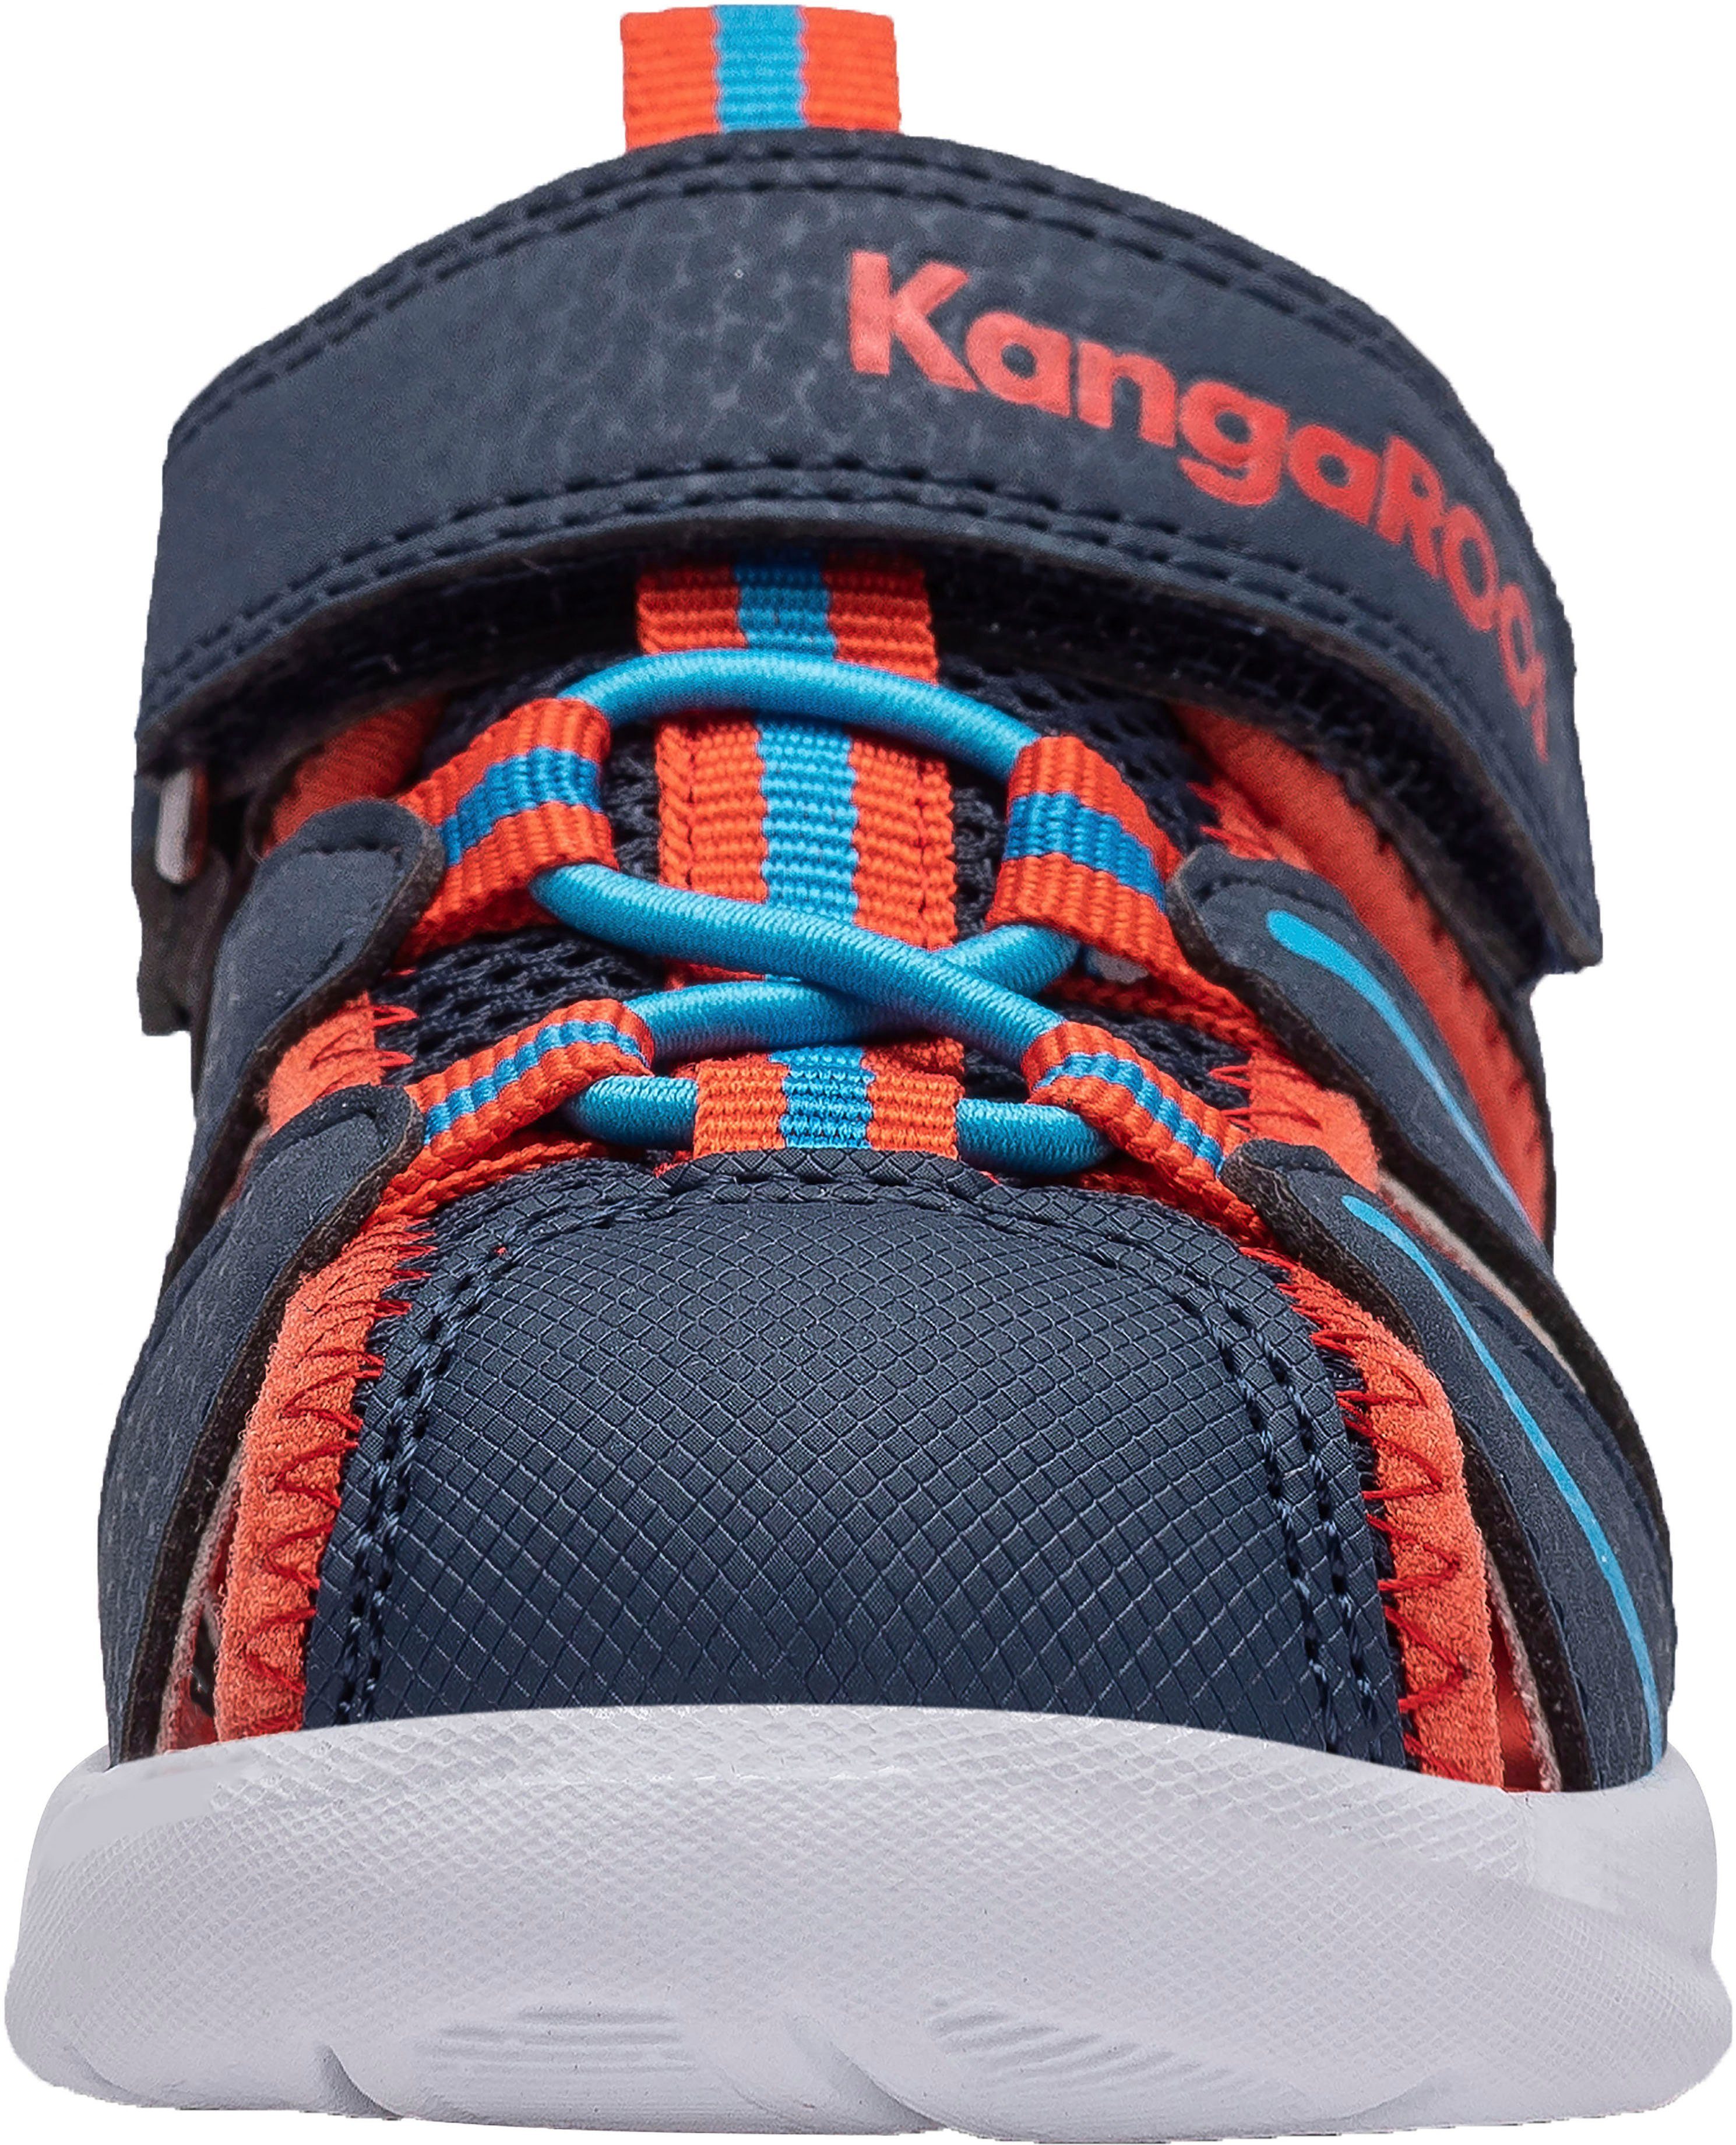 KangaROOS K-Grobi Sandale Klettverschluss navy mit